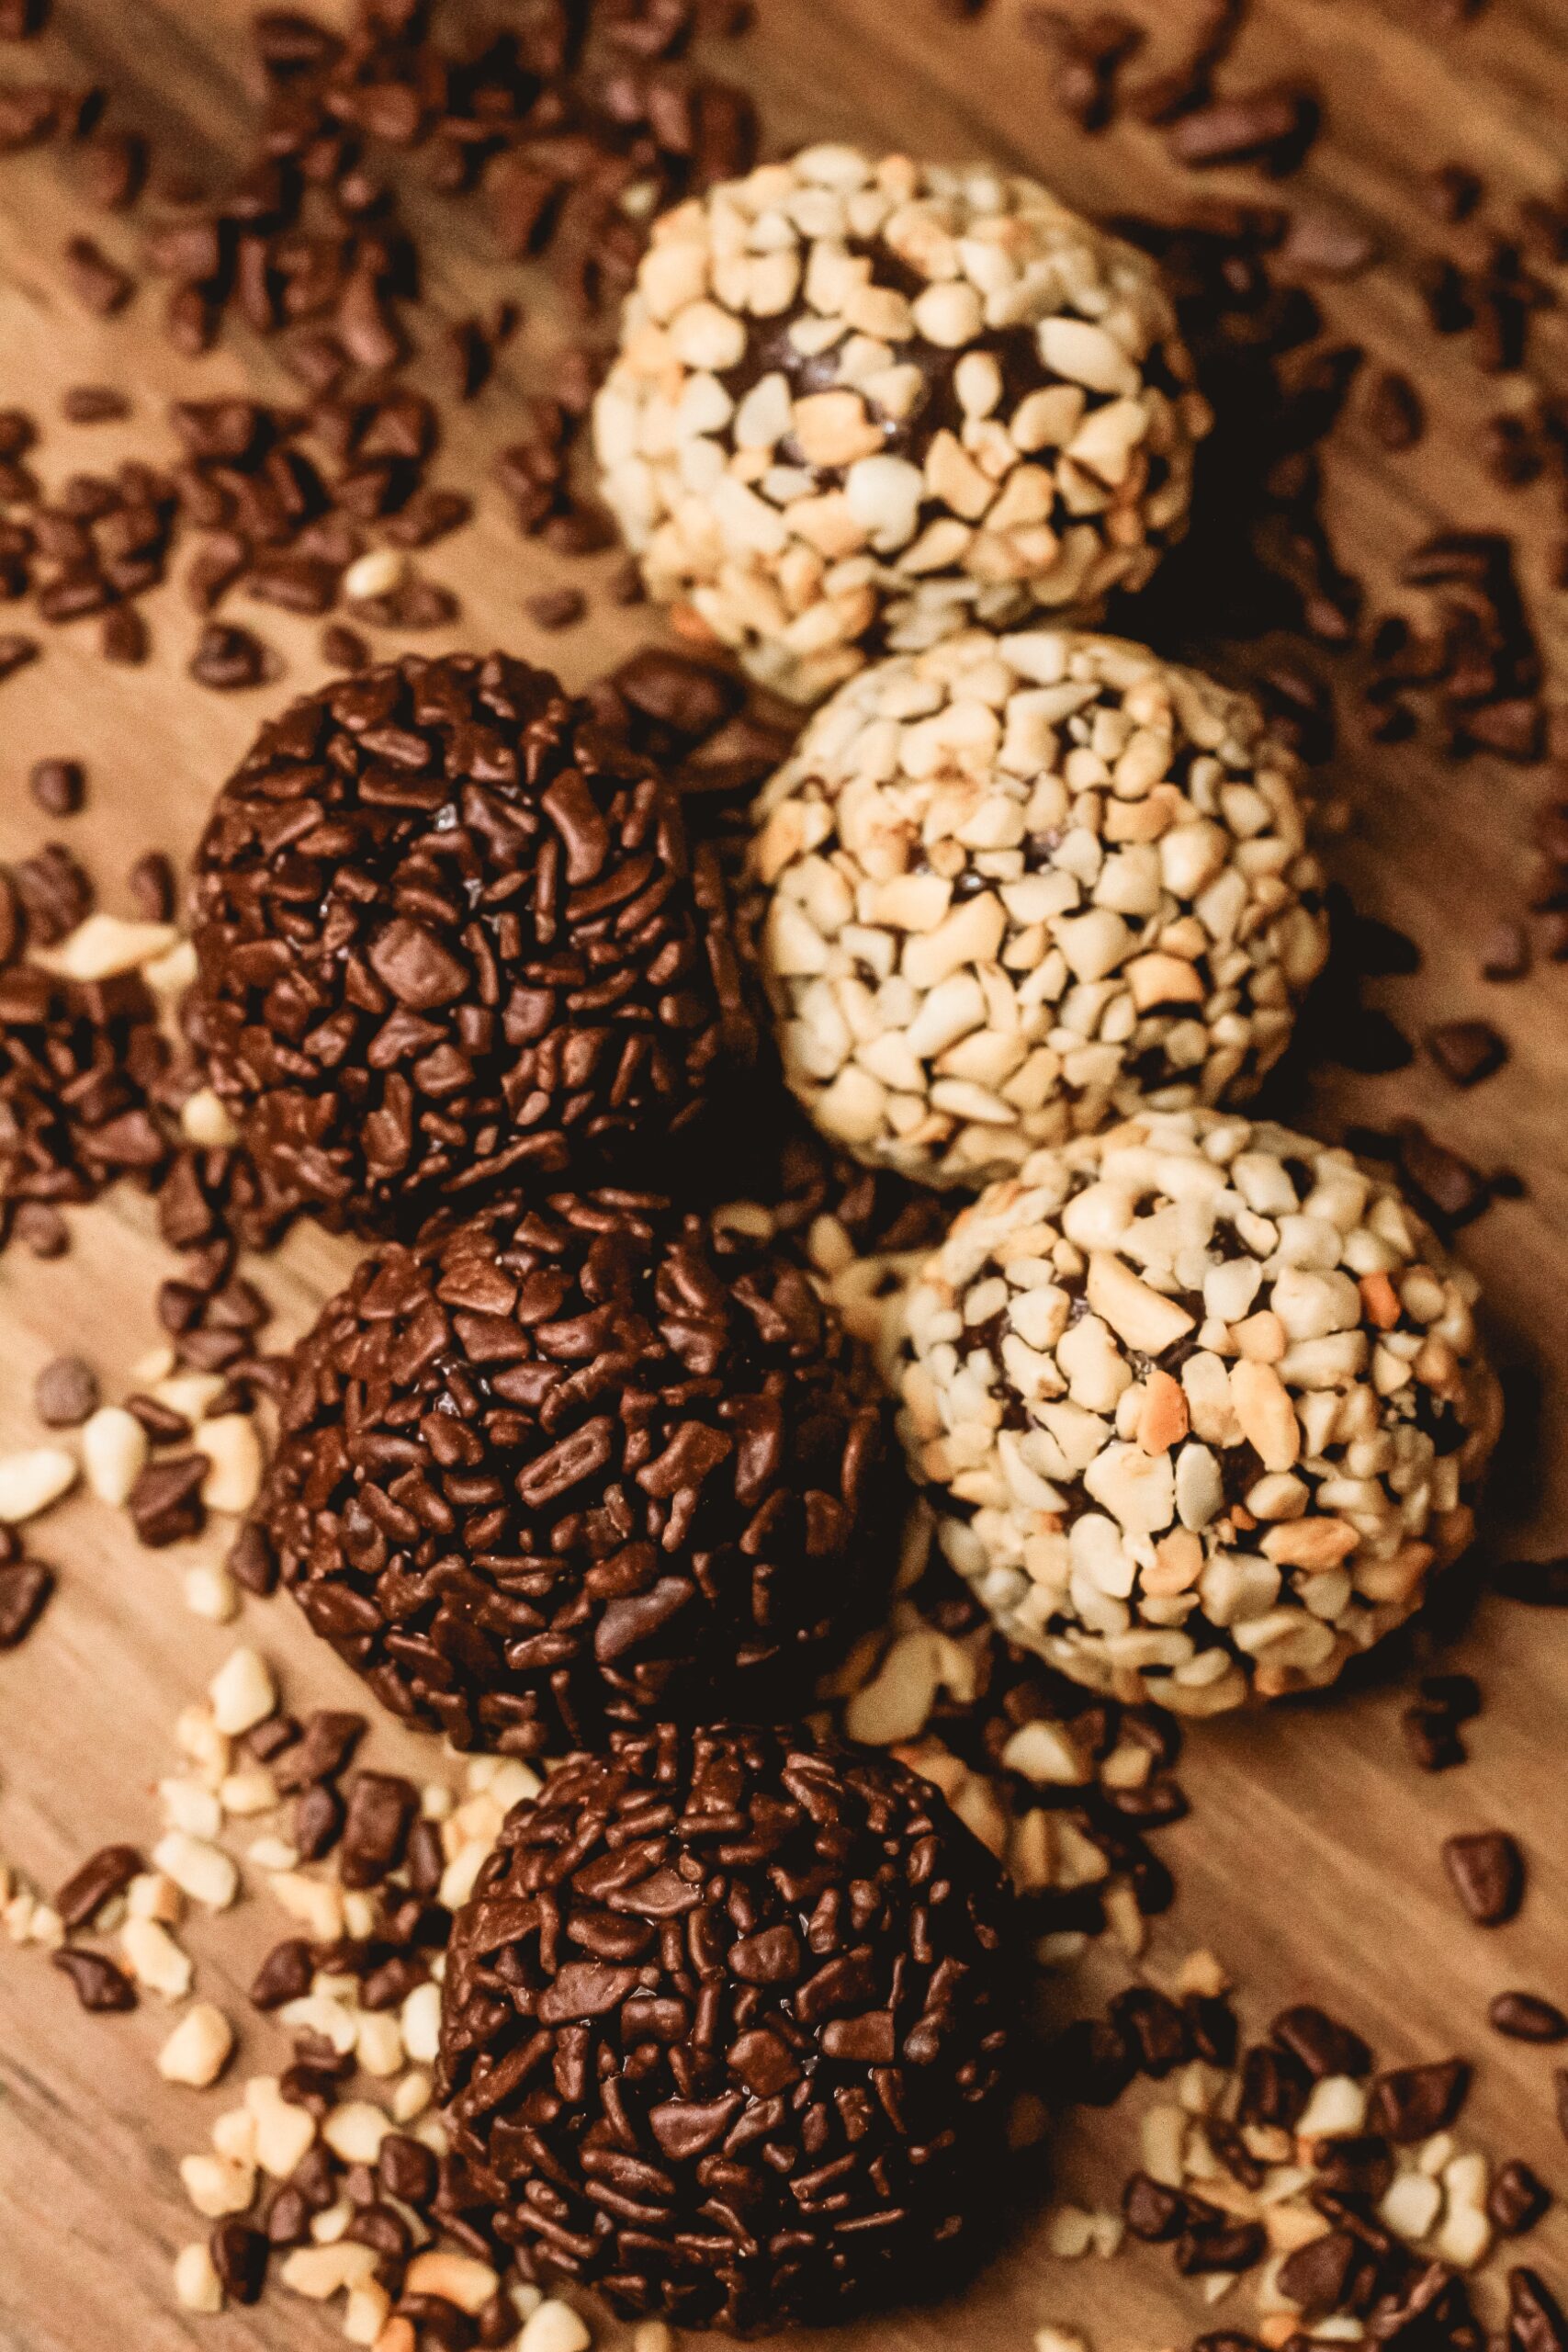 Whats Your Twist On Brigadeiro, The Beloved Brazilian Chocolate Treat?